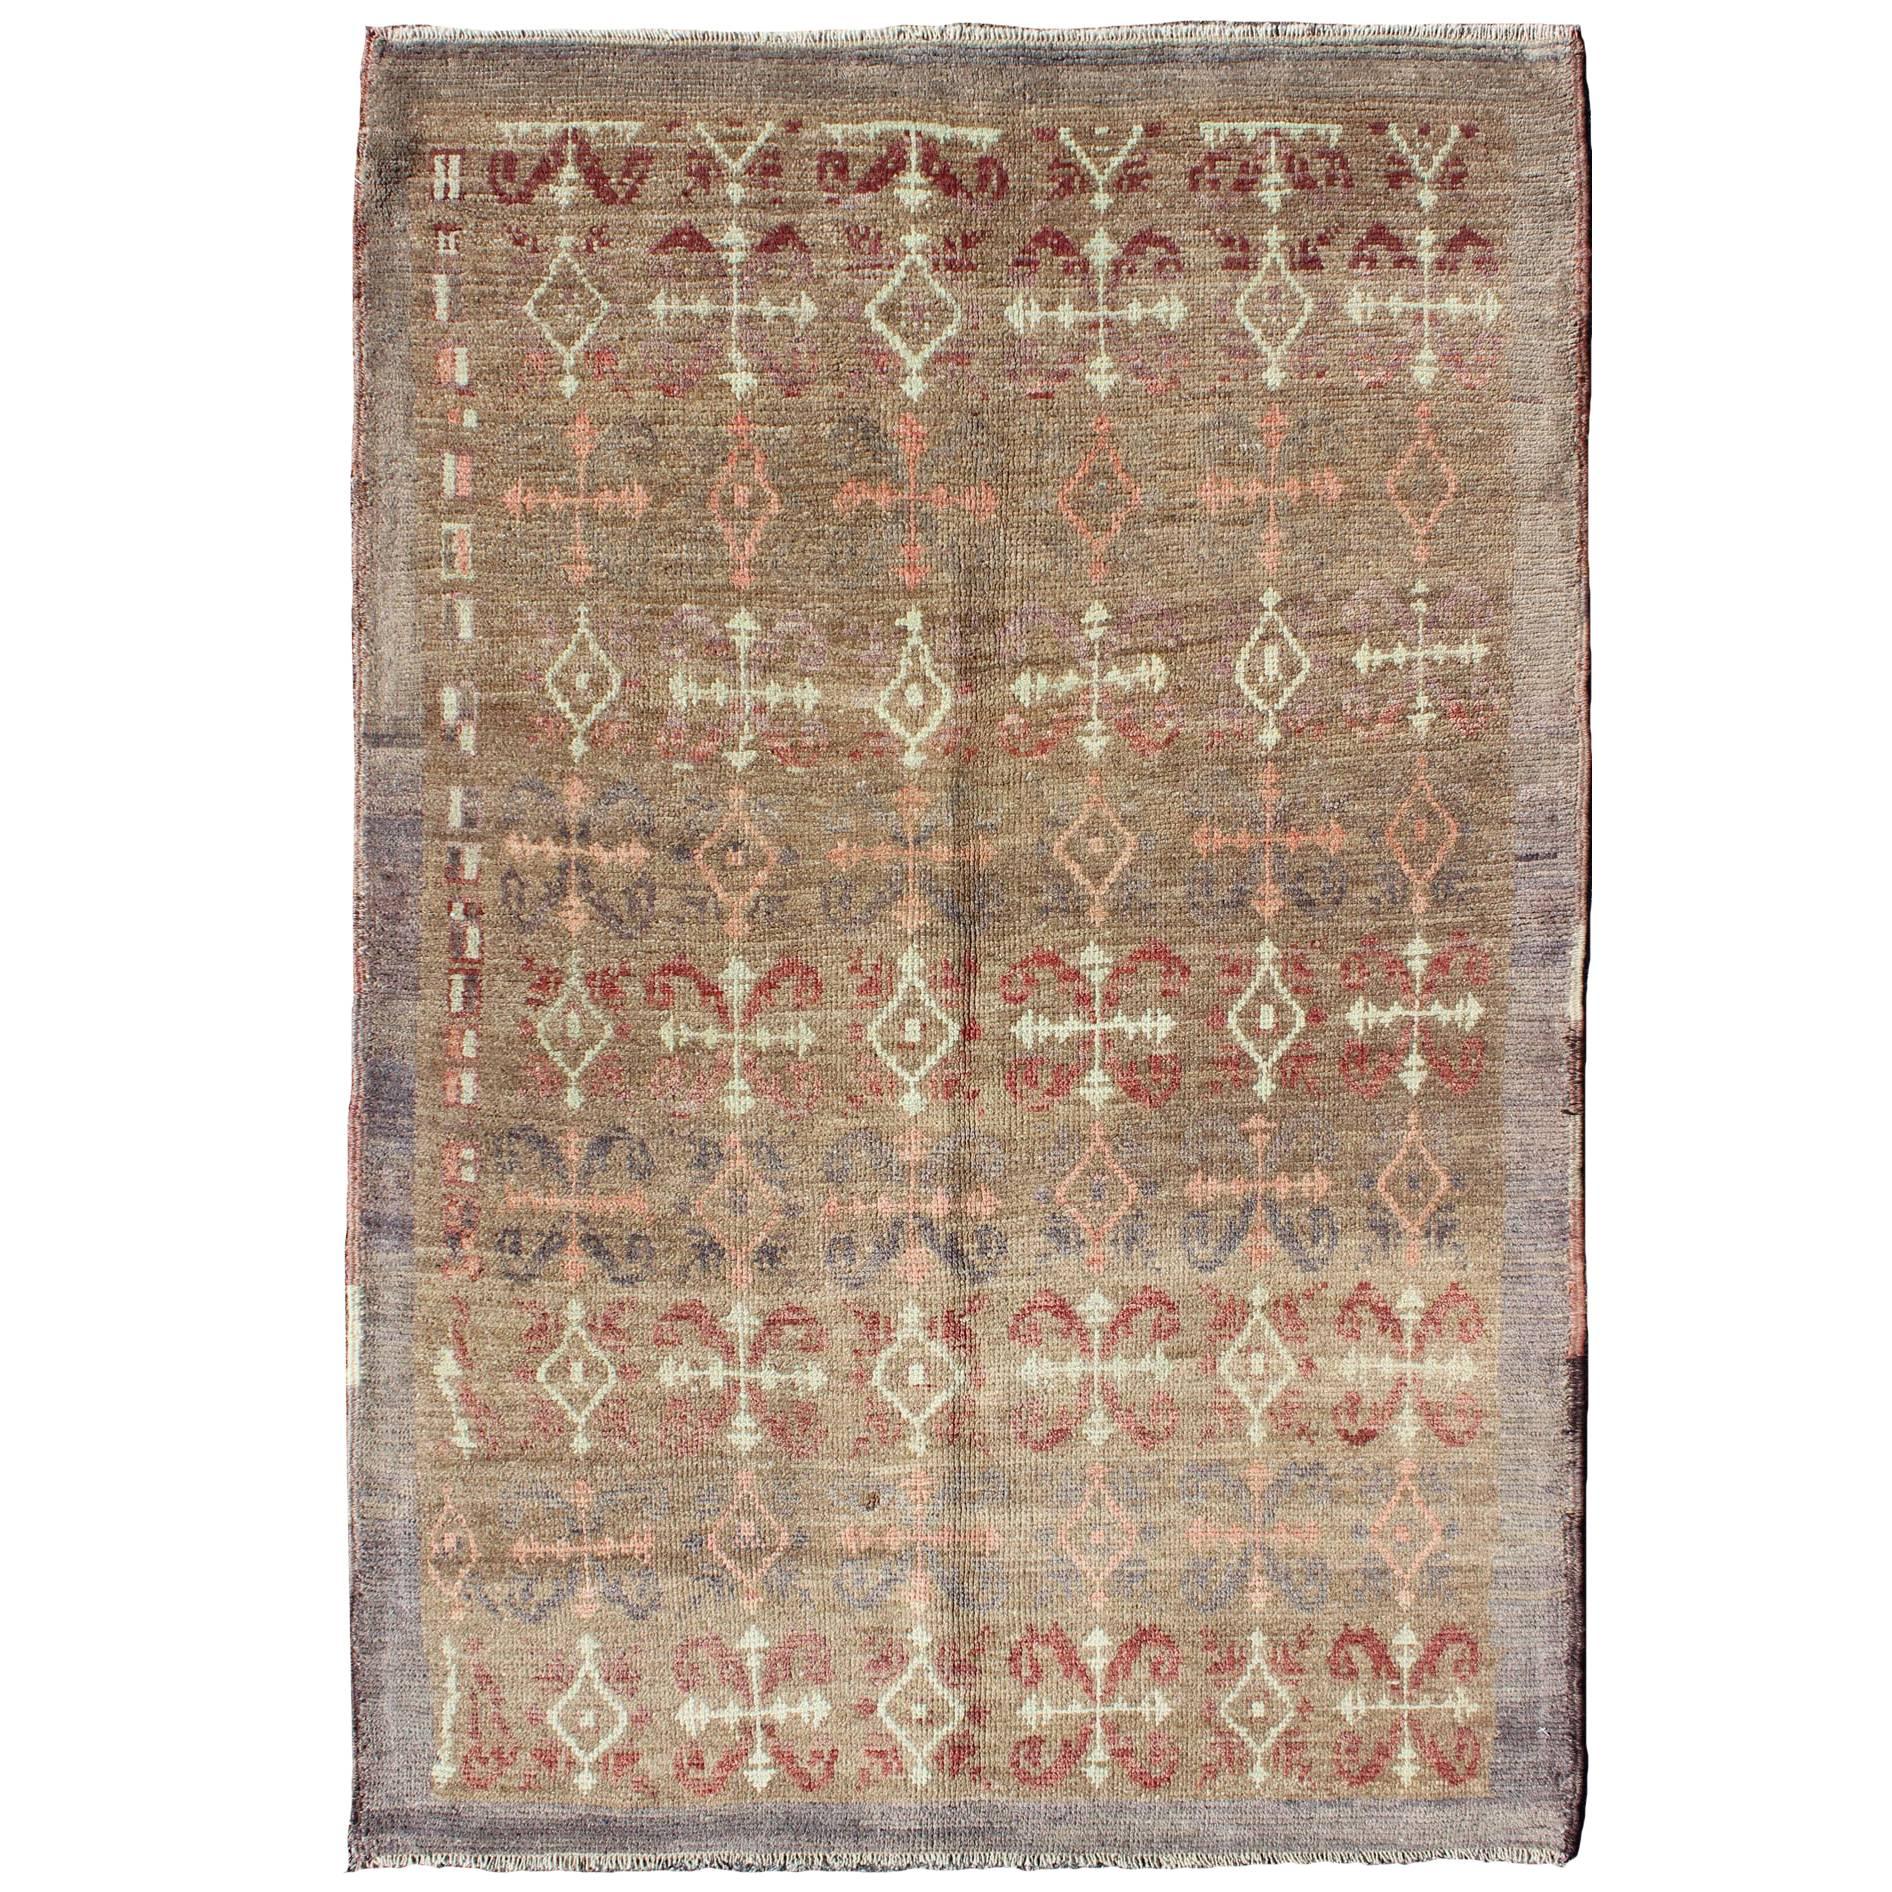 Vintage Turkish Carpet with All-Over Design Set on Light Taupe Field For Sale